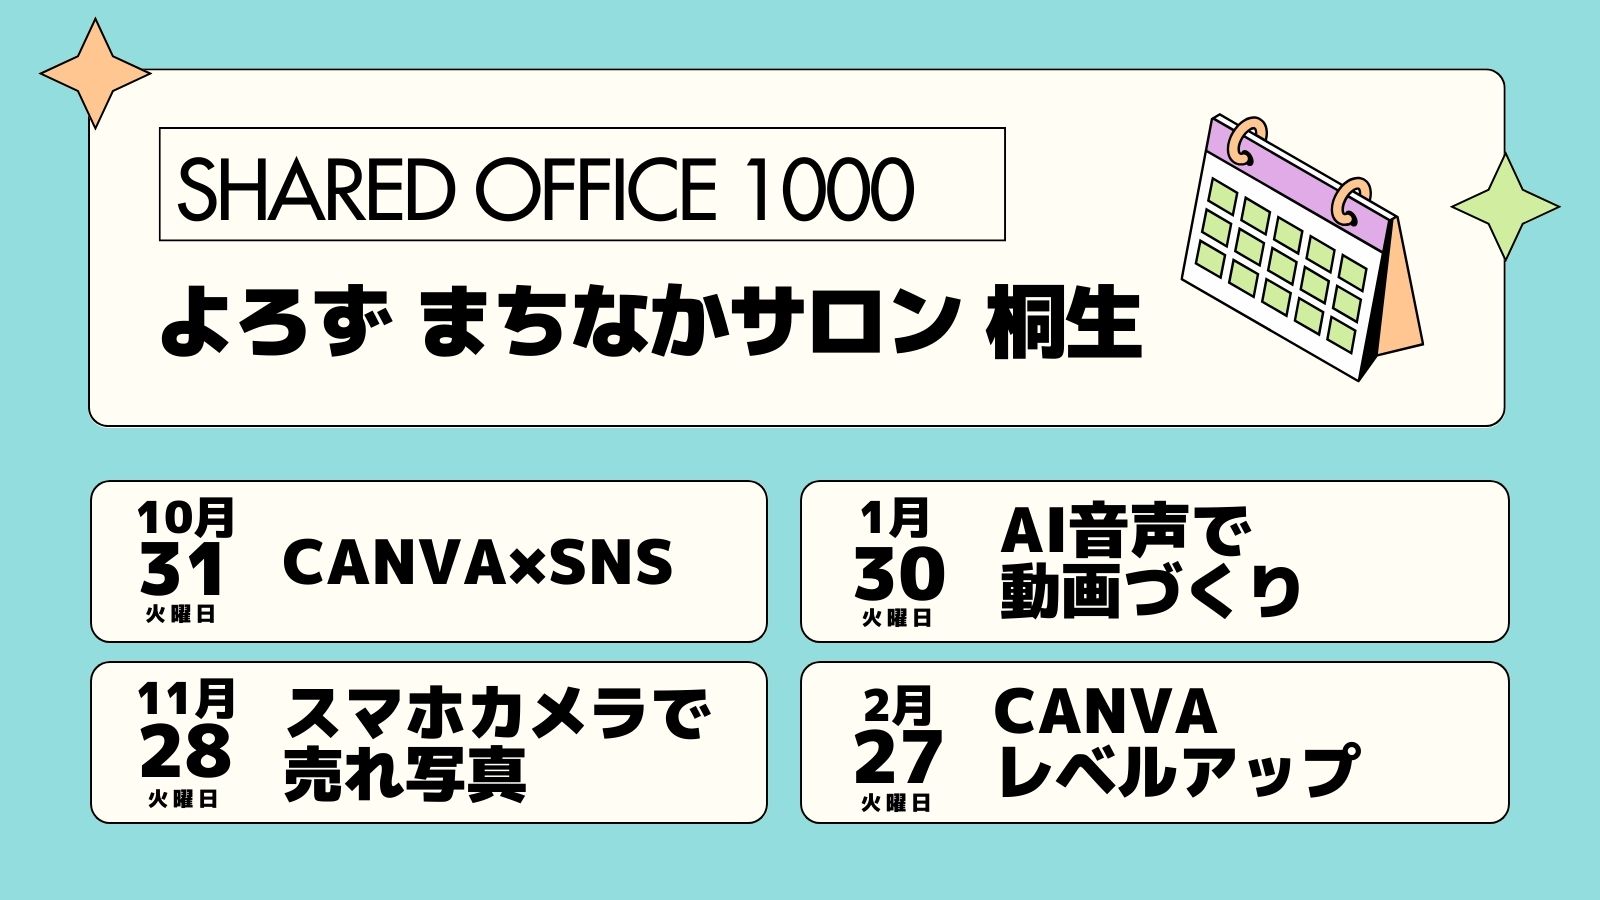 【Shared Office 1000スキルアップ無料セミナー】CanvaやAI音声動画など無料のセミナーを開催します